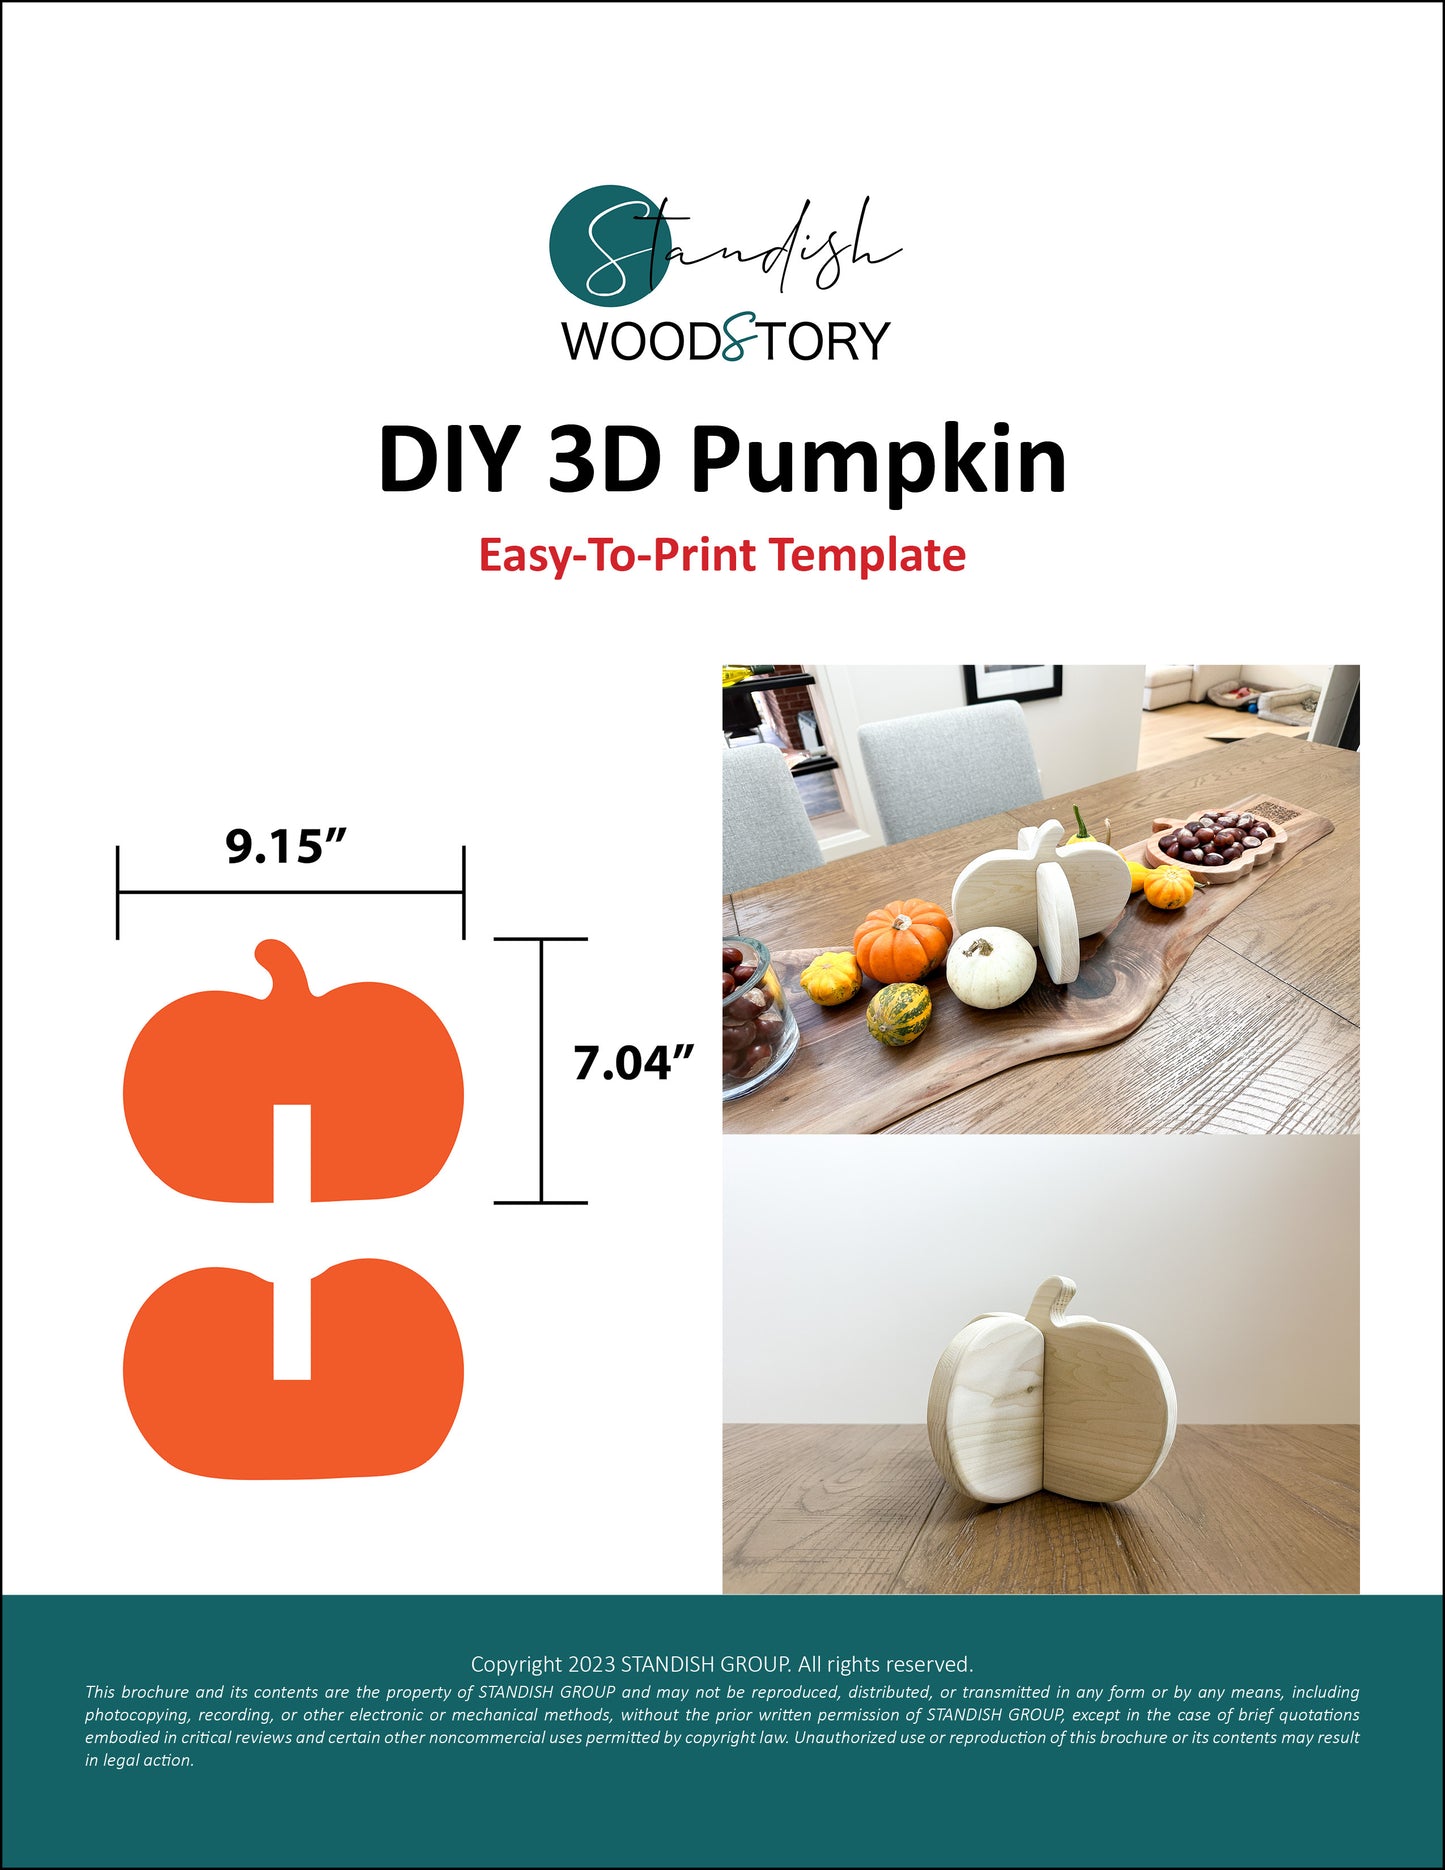 FREE 3D Pumpkin Template (Print at home PDF)